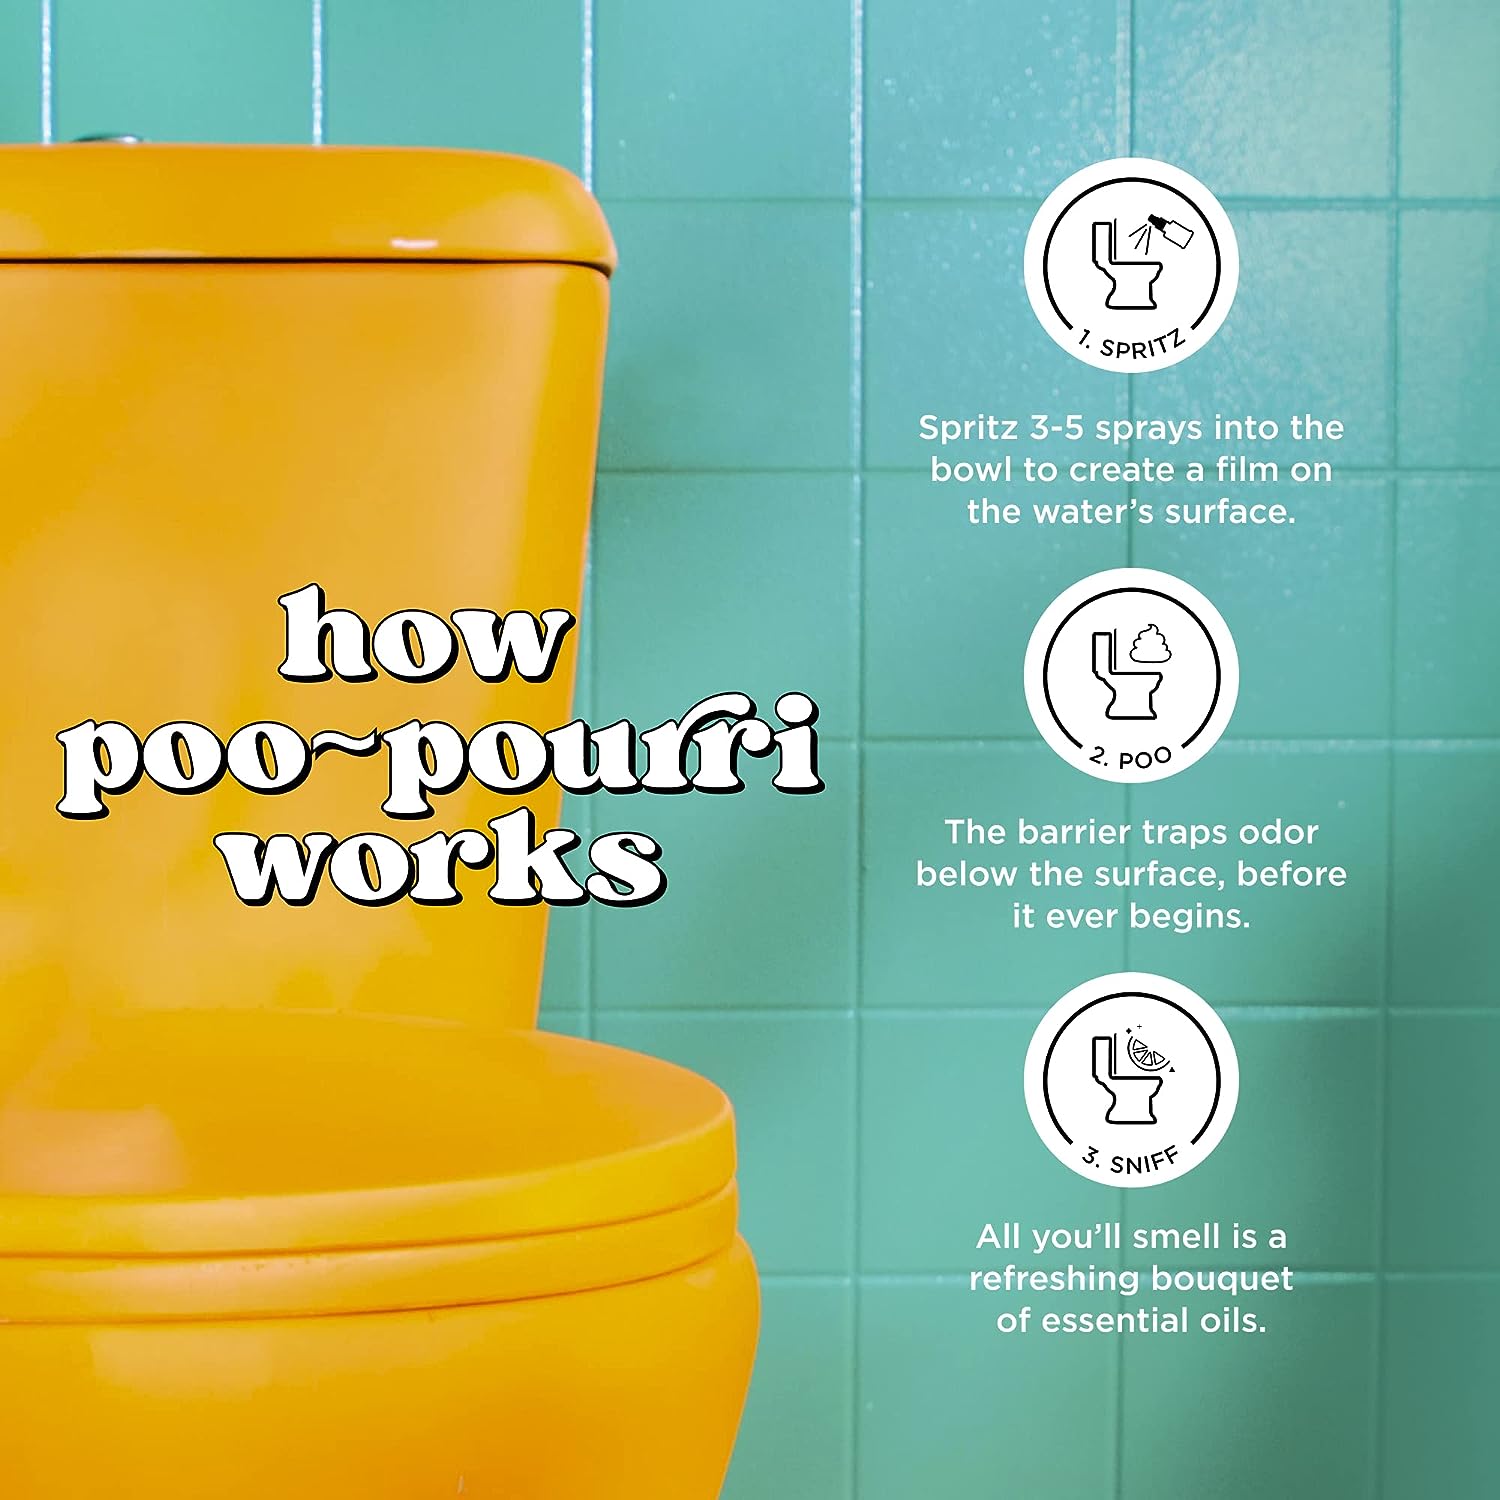 Poo-Pourri Before-You-Go Toilet Spray, Original Citrus, Travel Size 10 mL - Lemon, Bergamot and Lemongrass, 0.34 Fl Oz (Pack of 1)